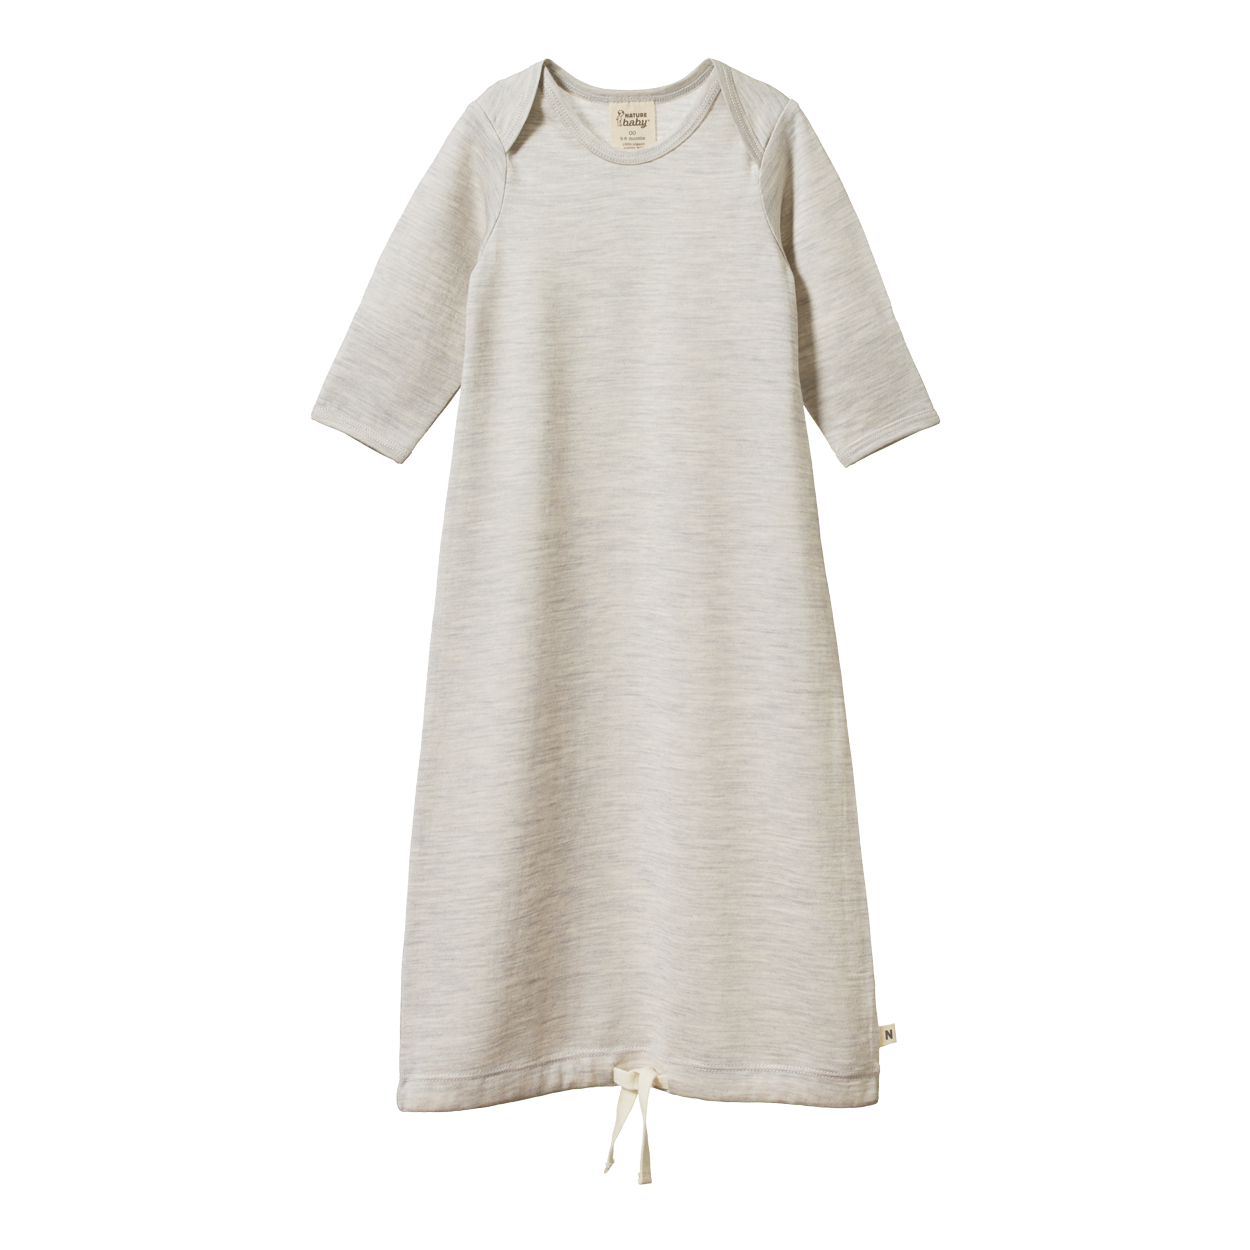 Cotton sleeping gown - grey marl stripe